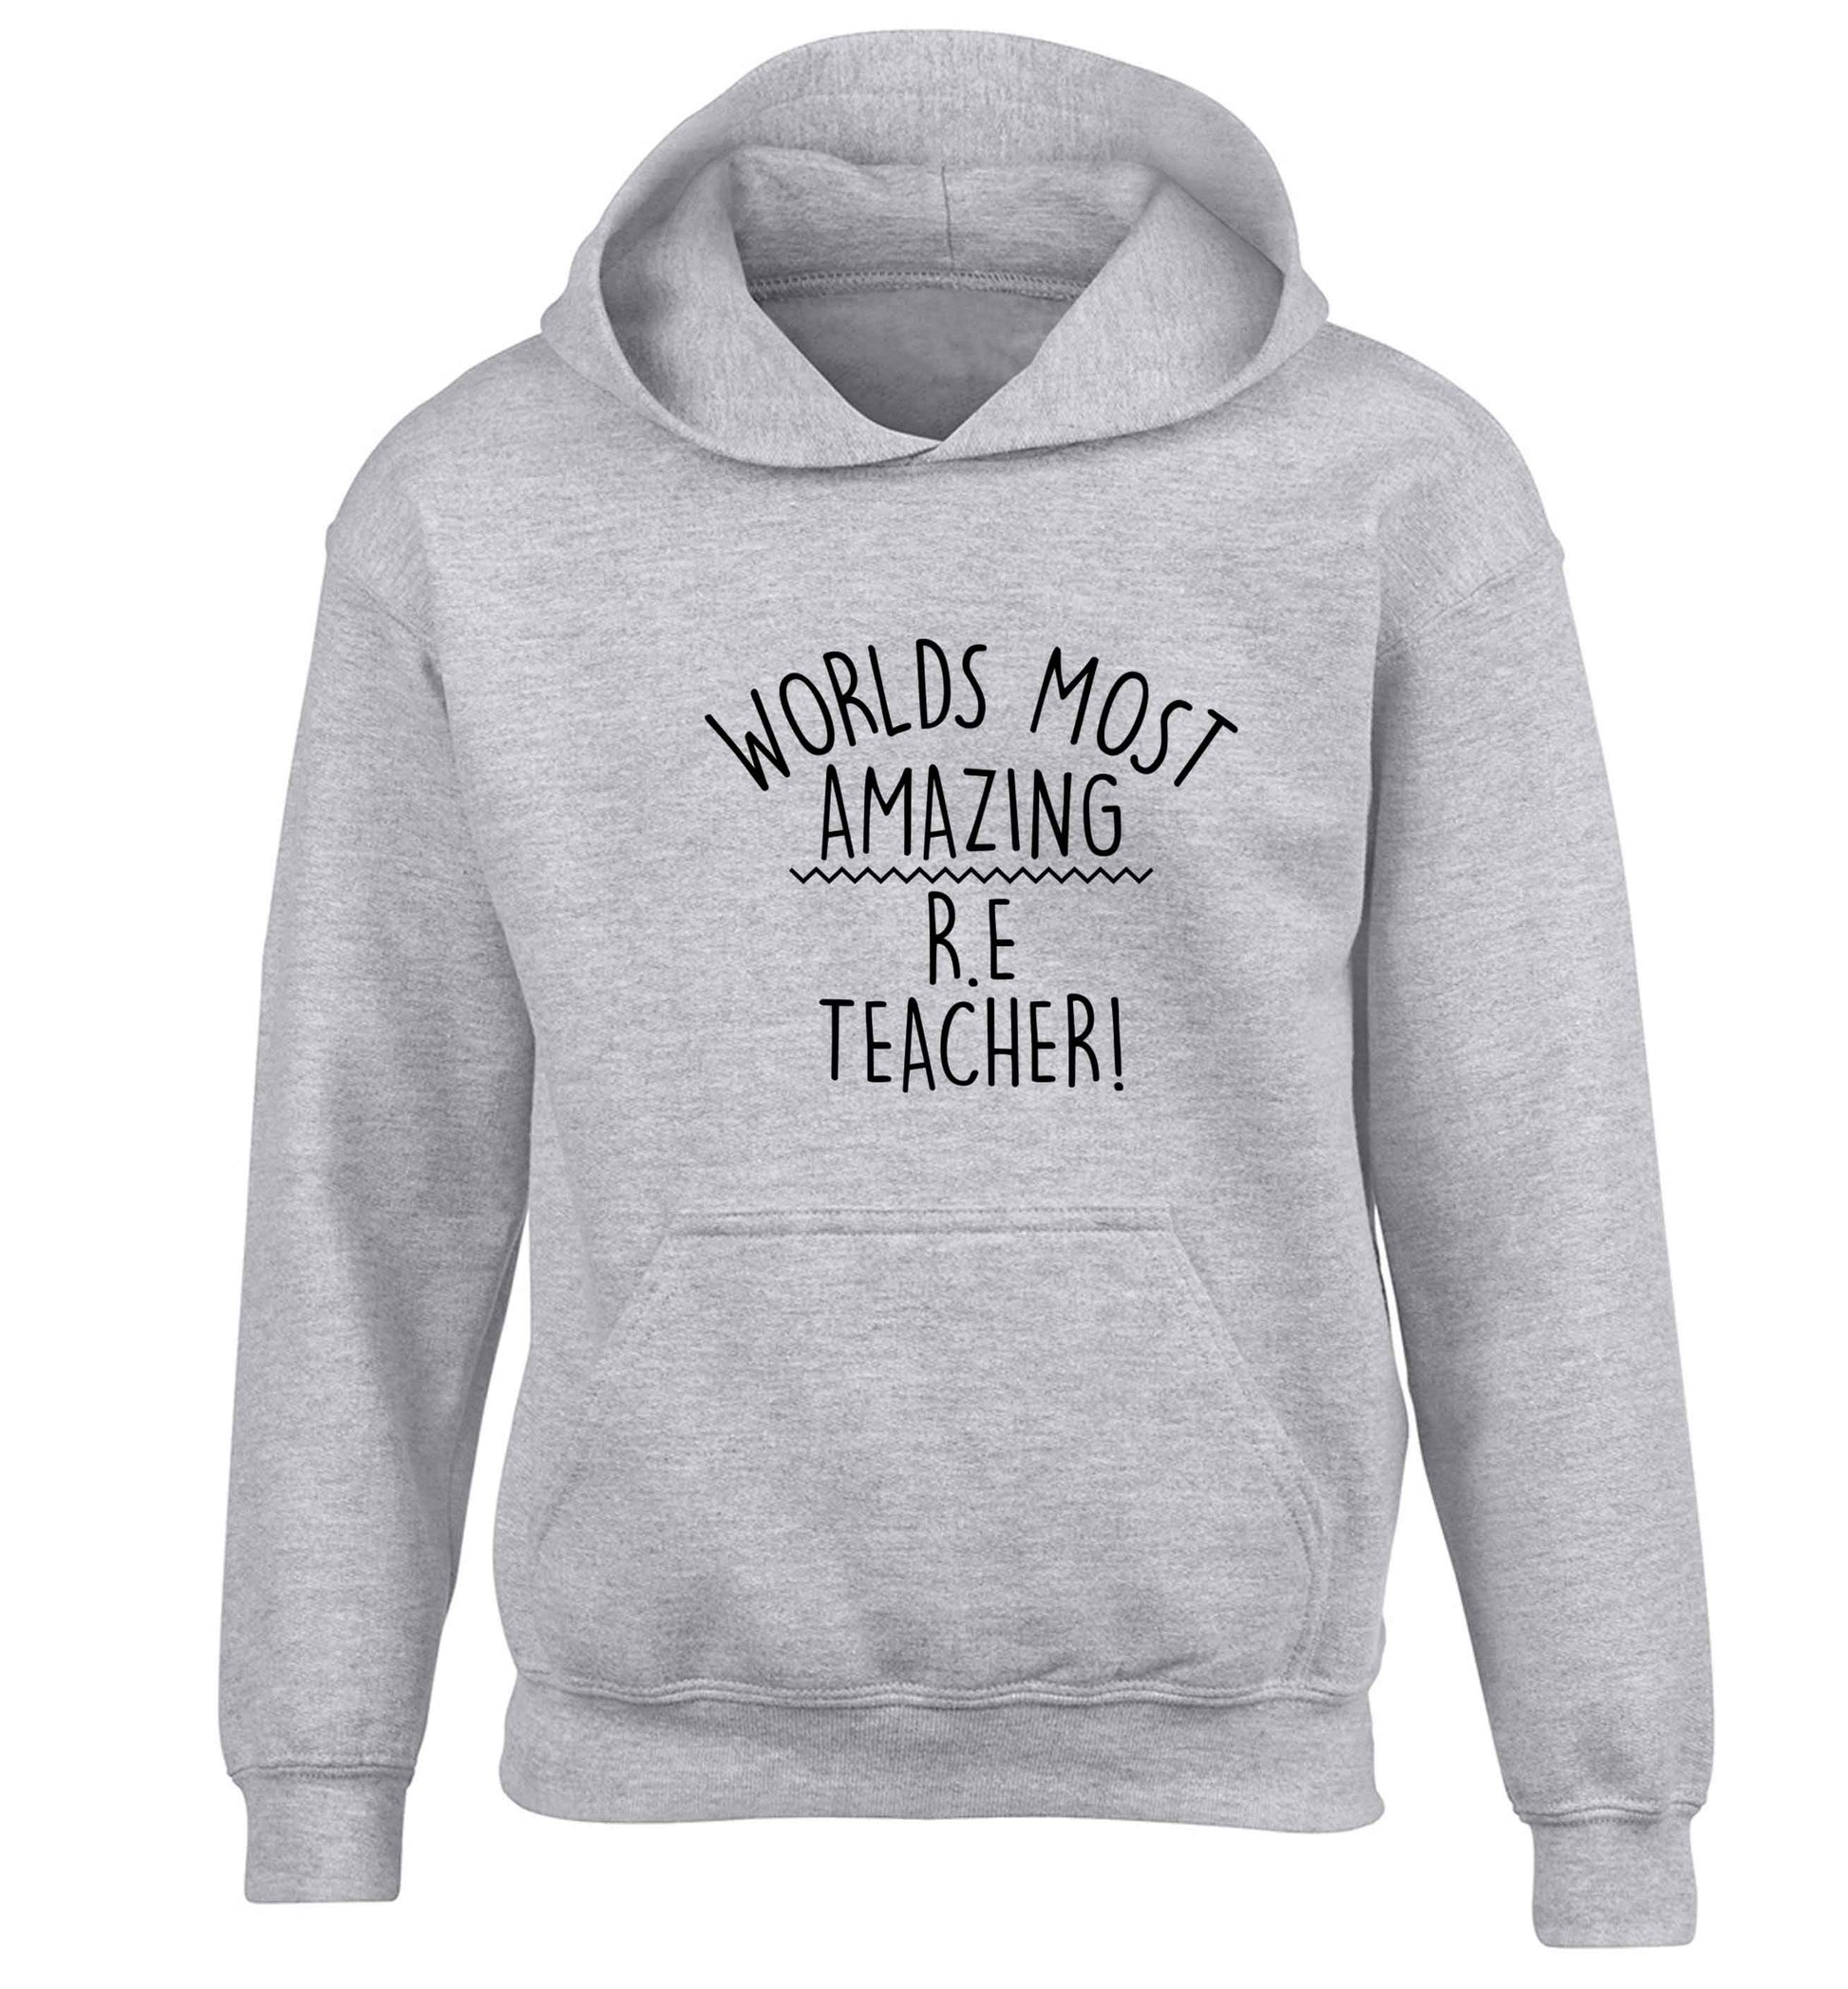 Worlds most amazing R.E teacher children's grey hoodie 12-13 Years